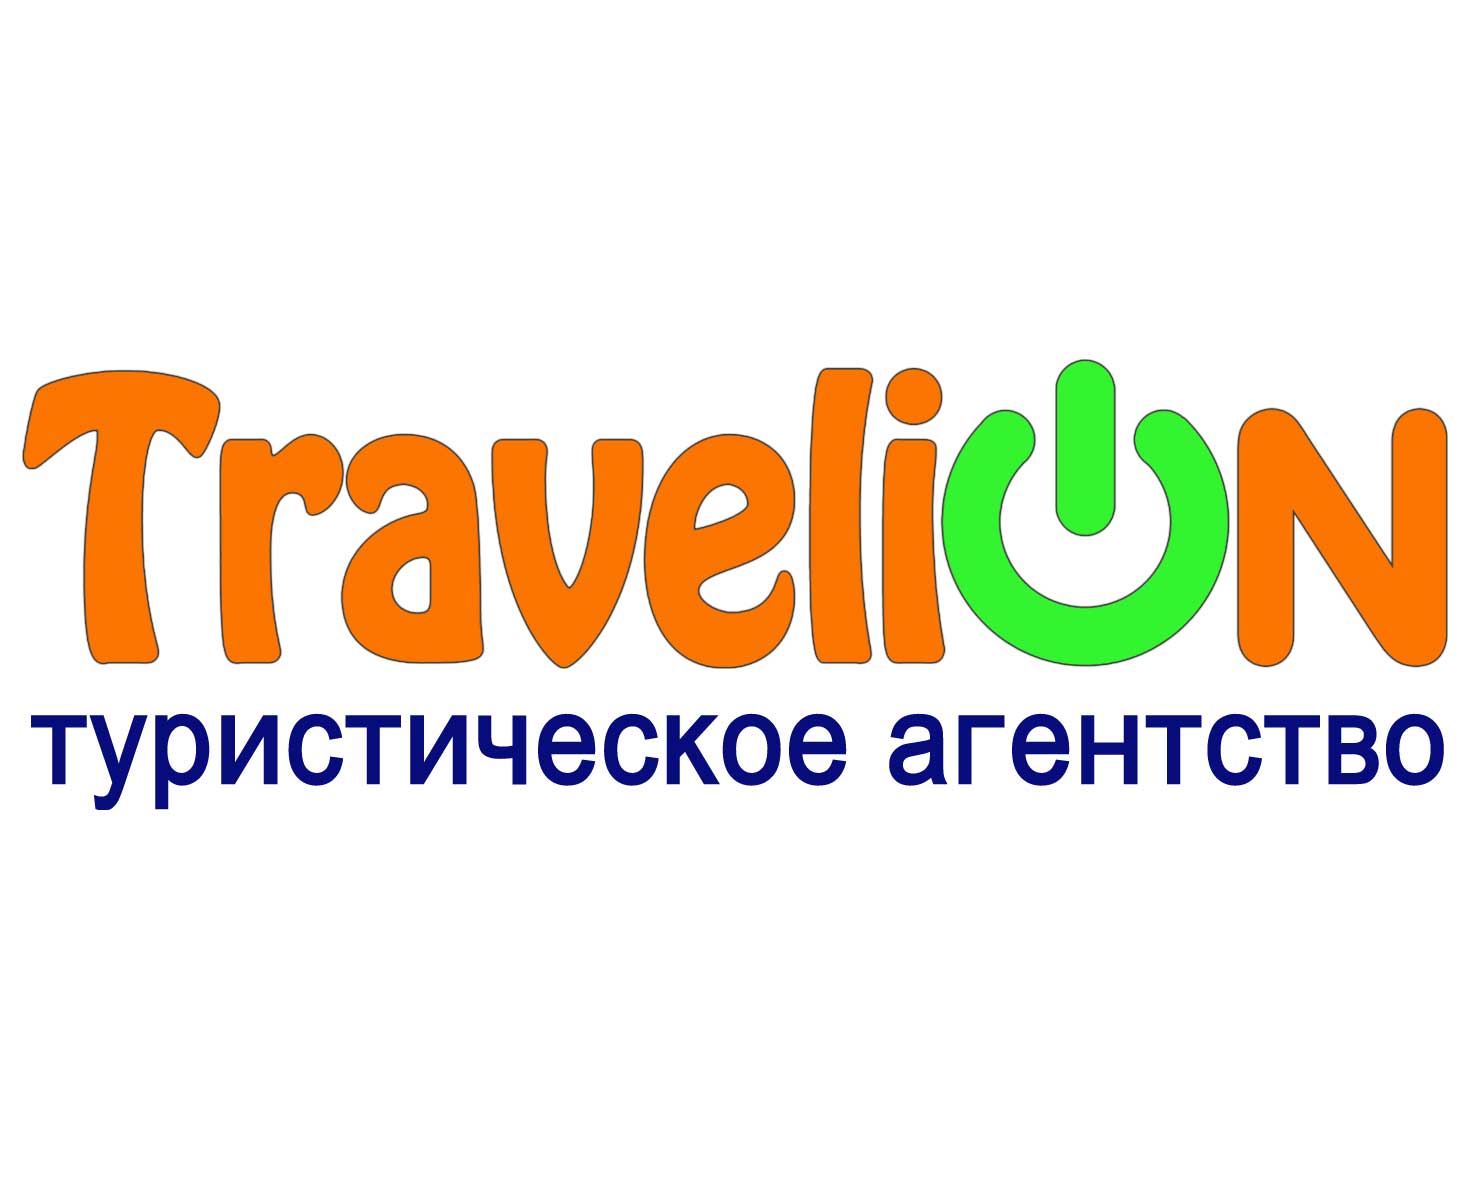 Travelion - туристическое агентство